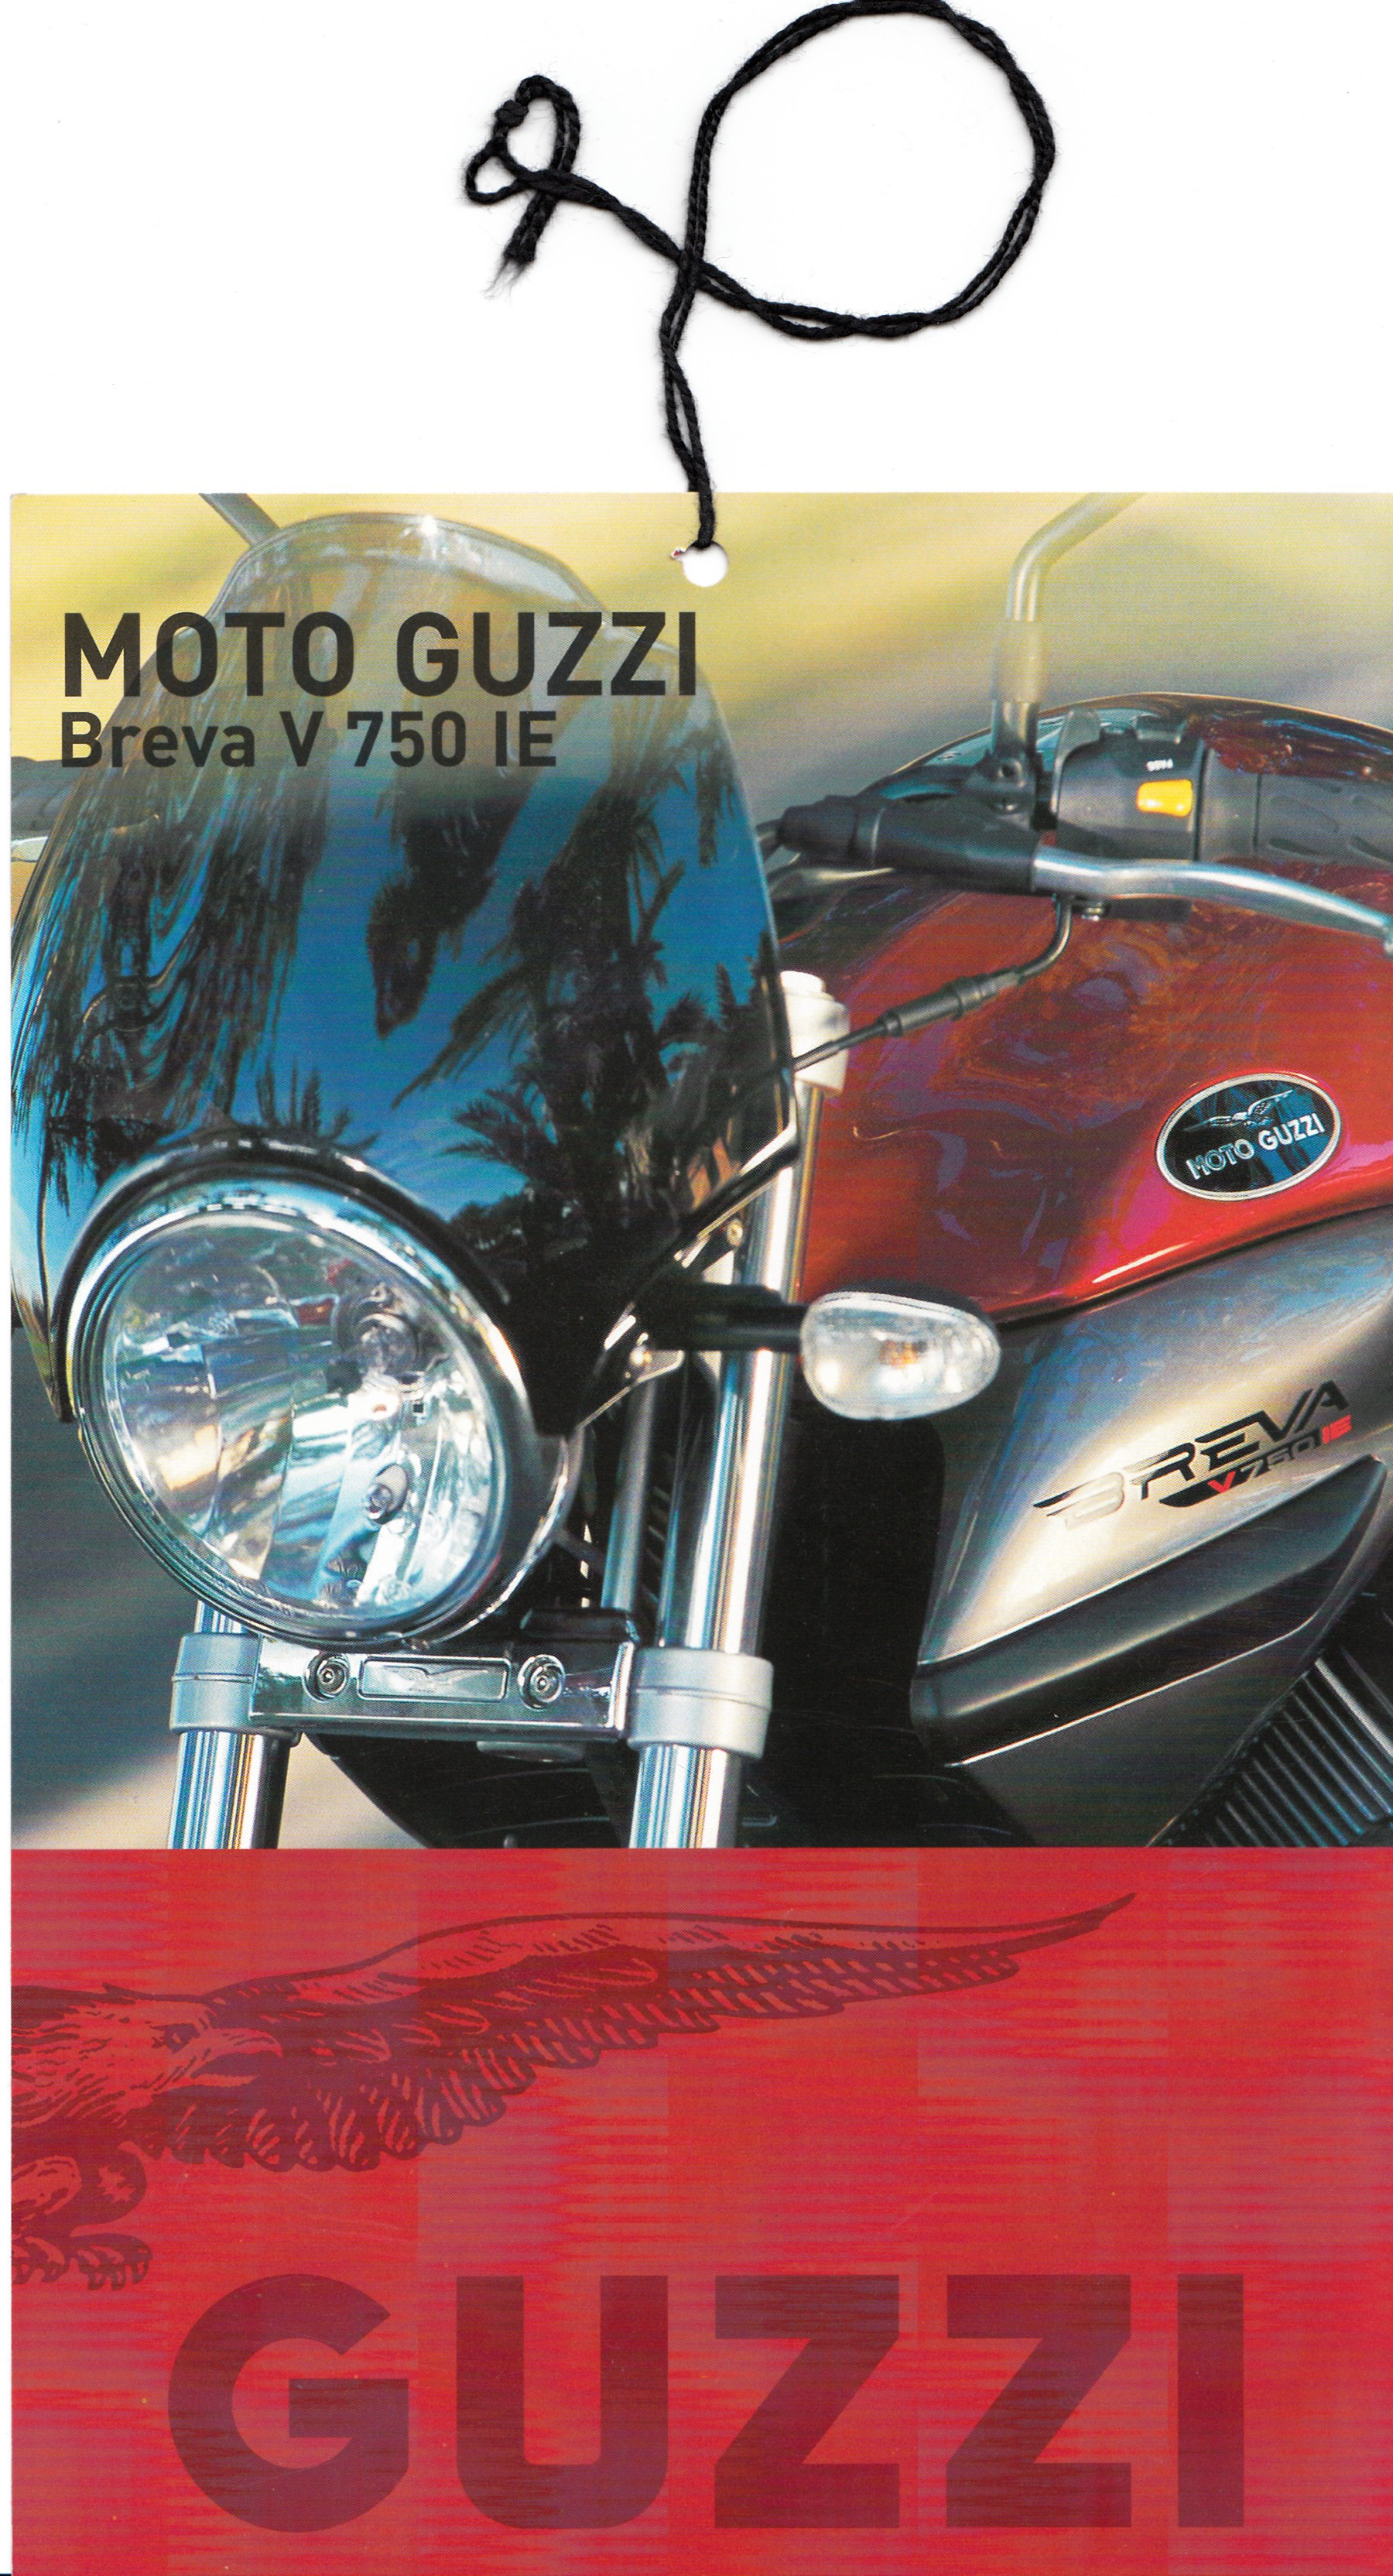 Tag - Moto Guzzi Breva V 750 IE